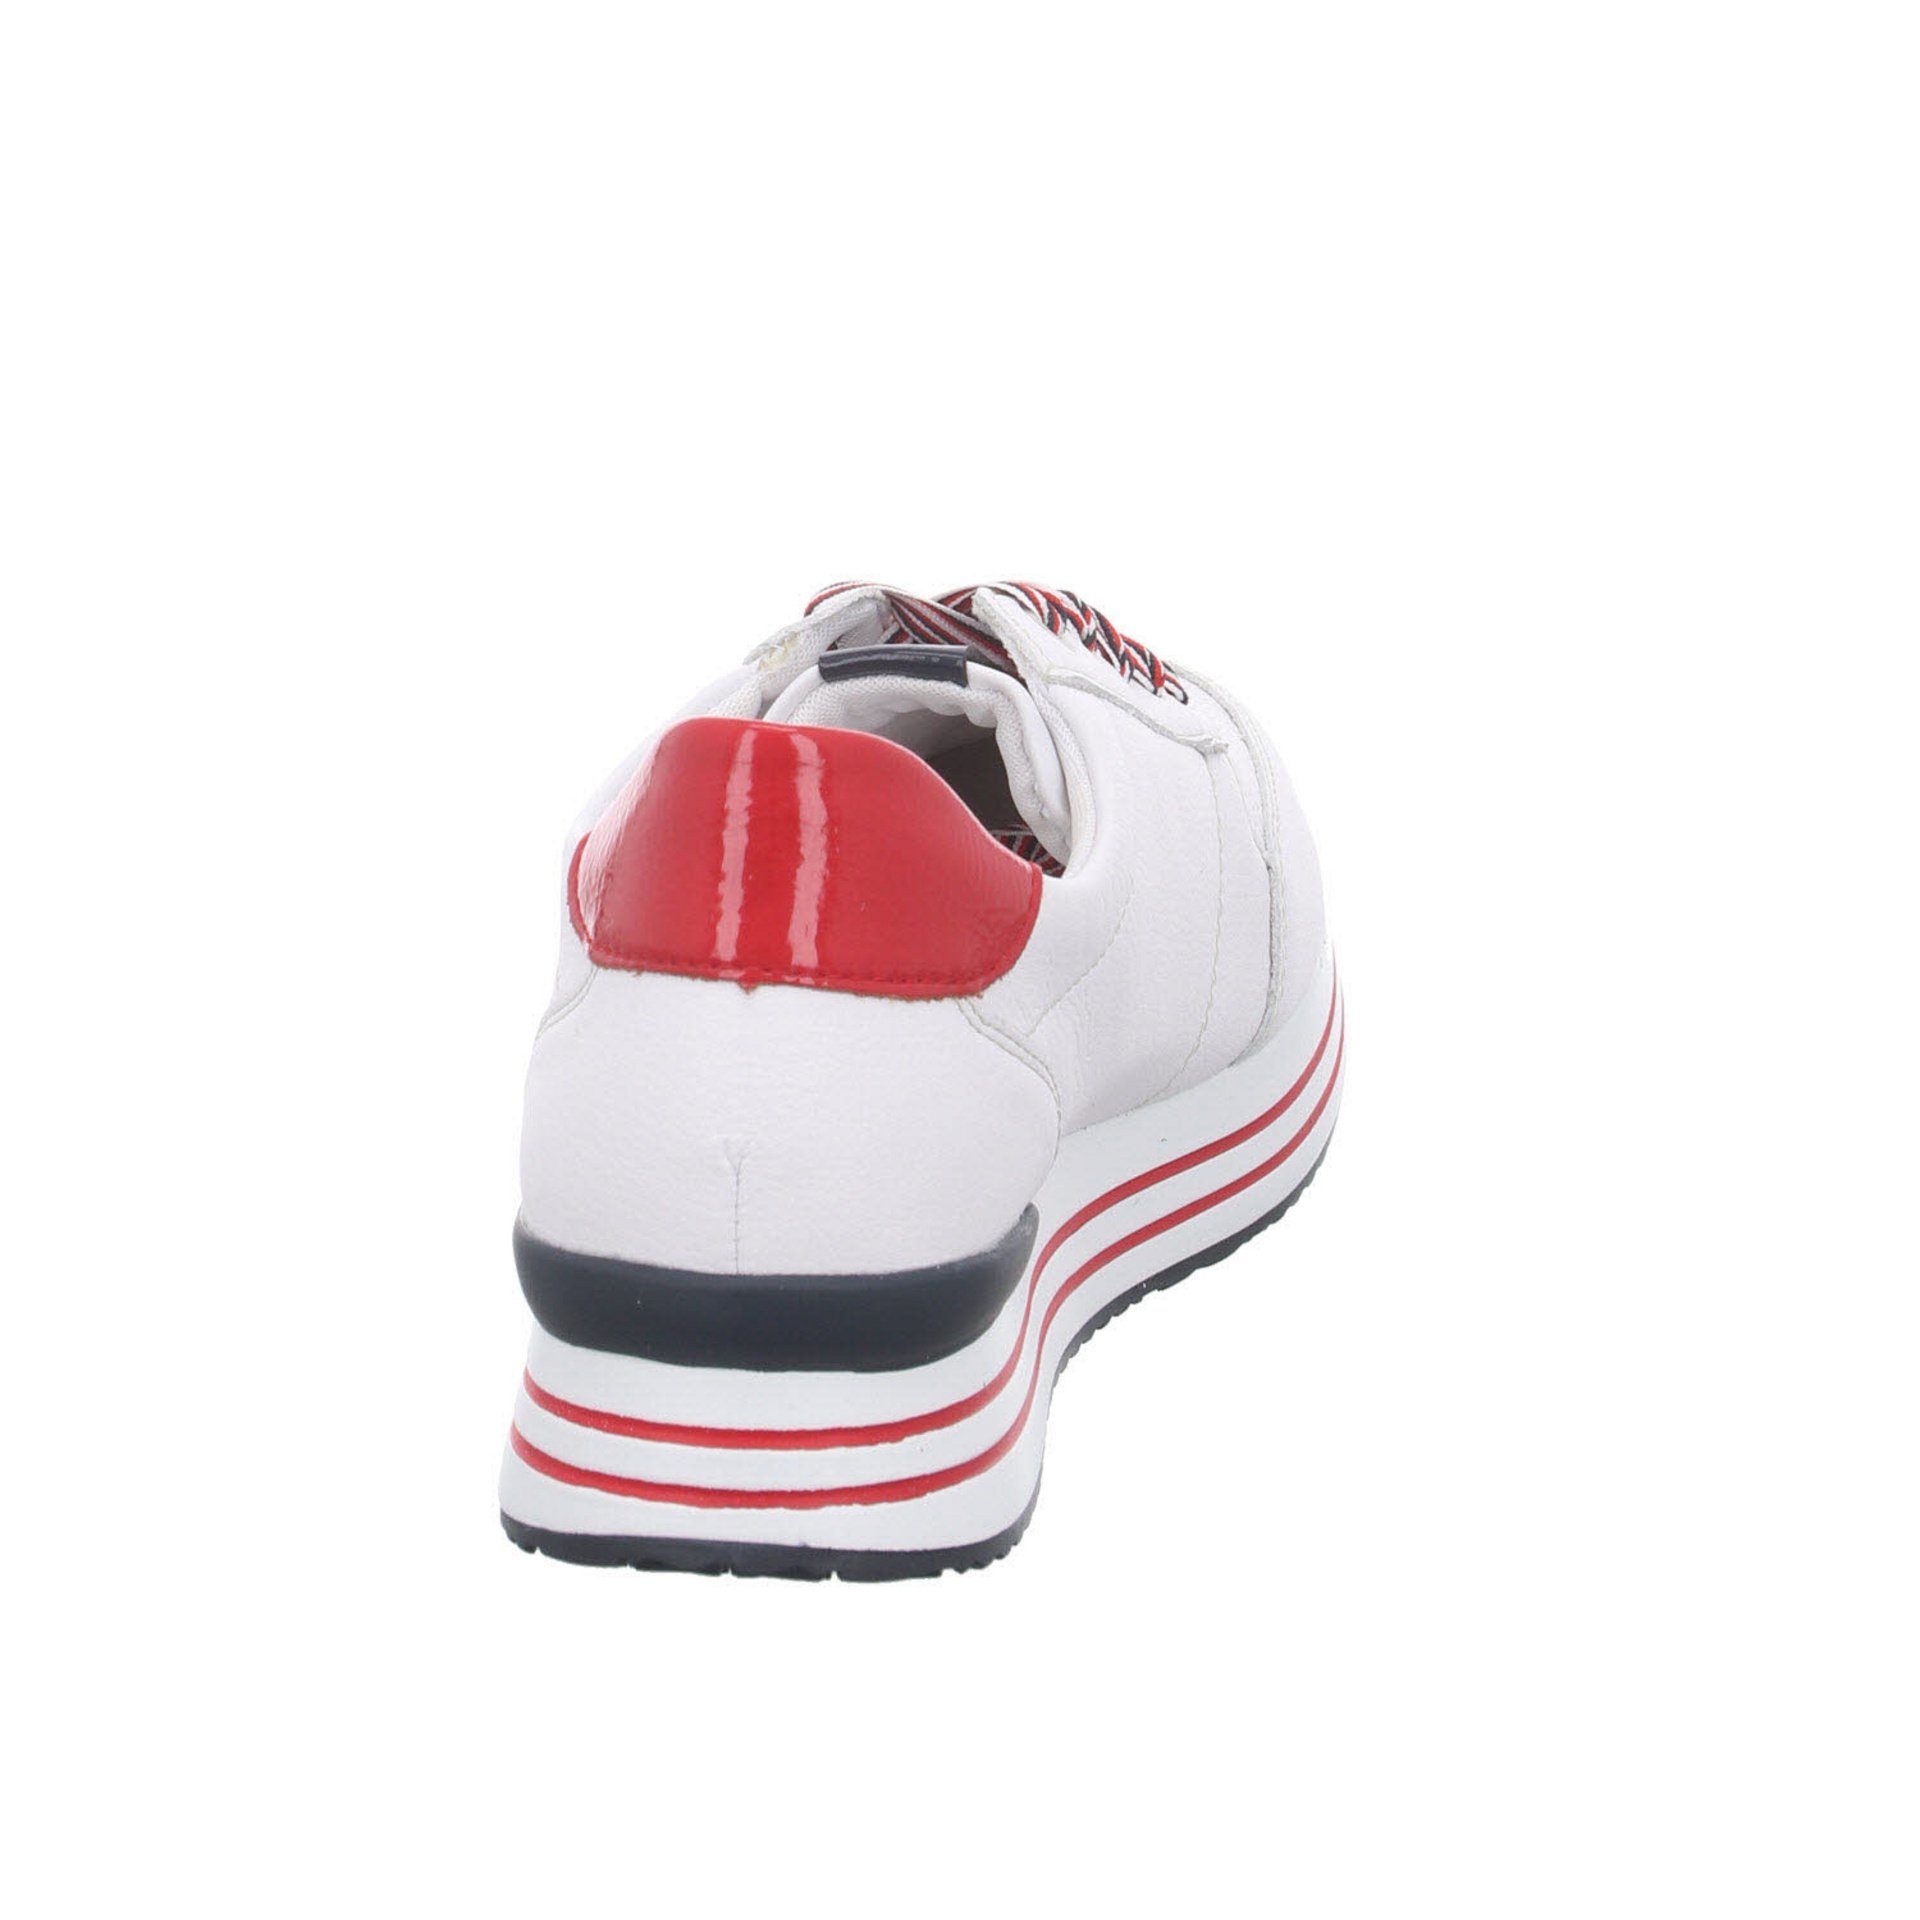 Sport Schuhe Leder-/Textilkombination Halbschuhe Damen weiß kombi Sneaker Sneaker Schnürschuh Remonte